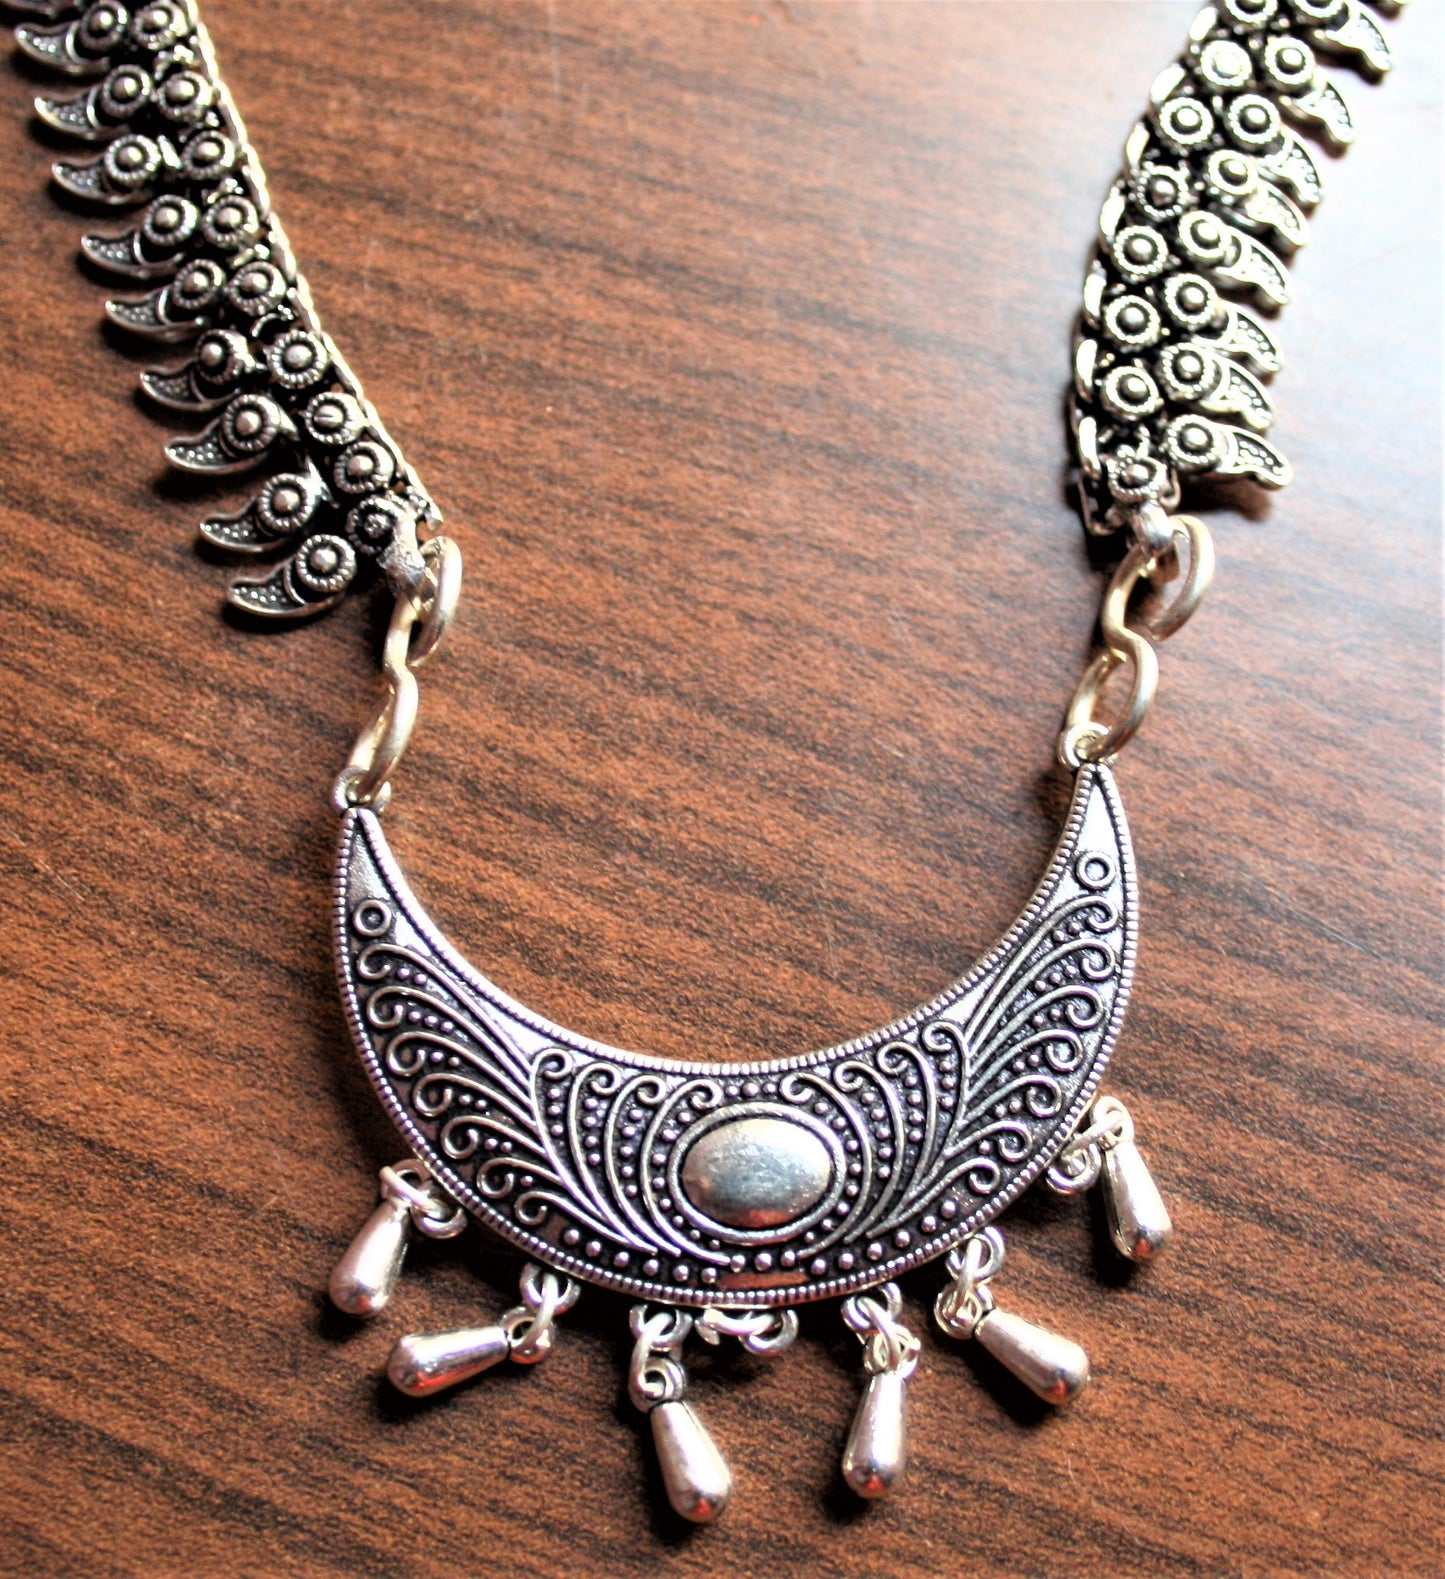 Silver Oxidized Necklace with Crescent Moon Pendant - GlitterGleam